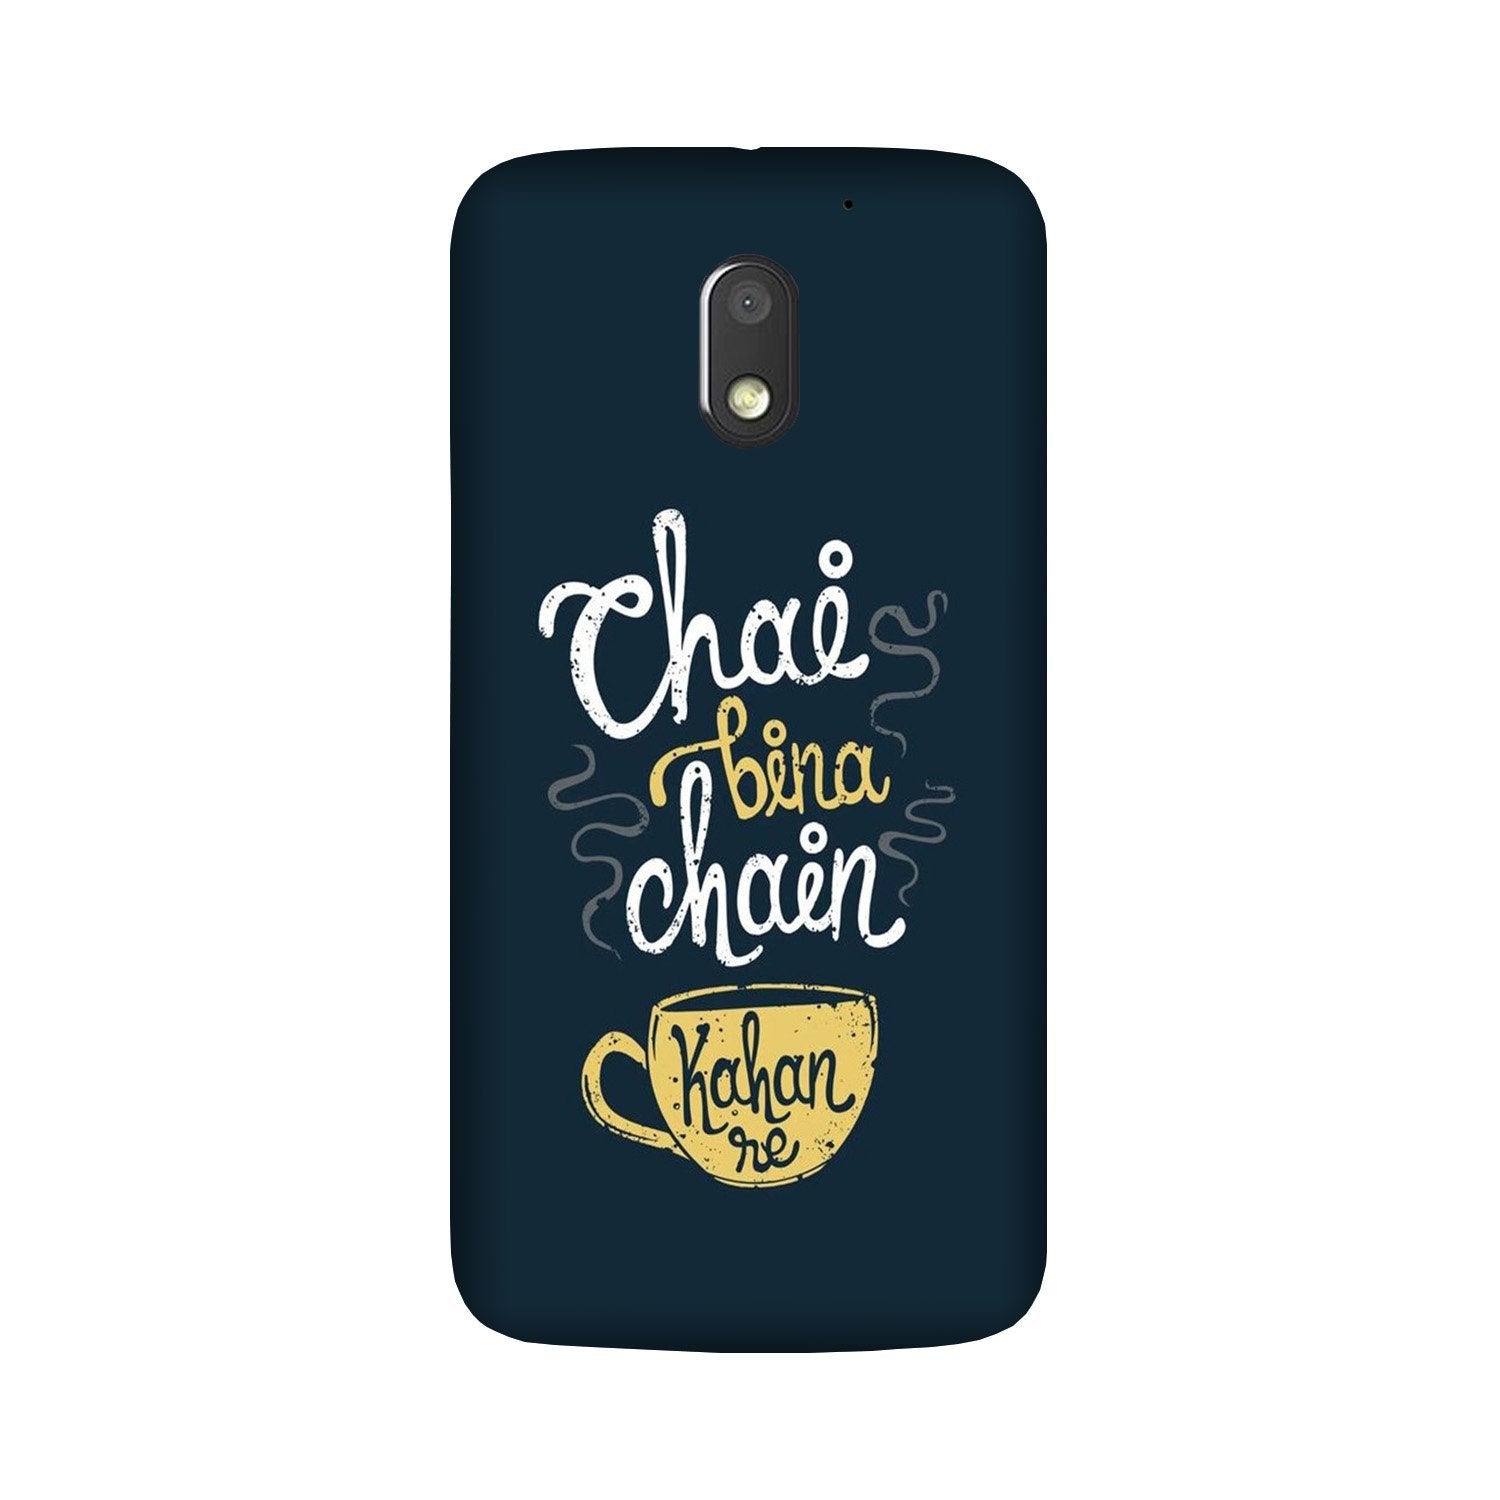 Chai Bina Chain Kahan Case for Moto G4 Play(Design - 144)